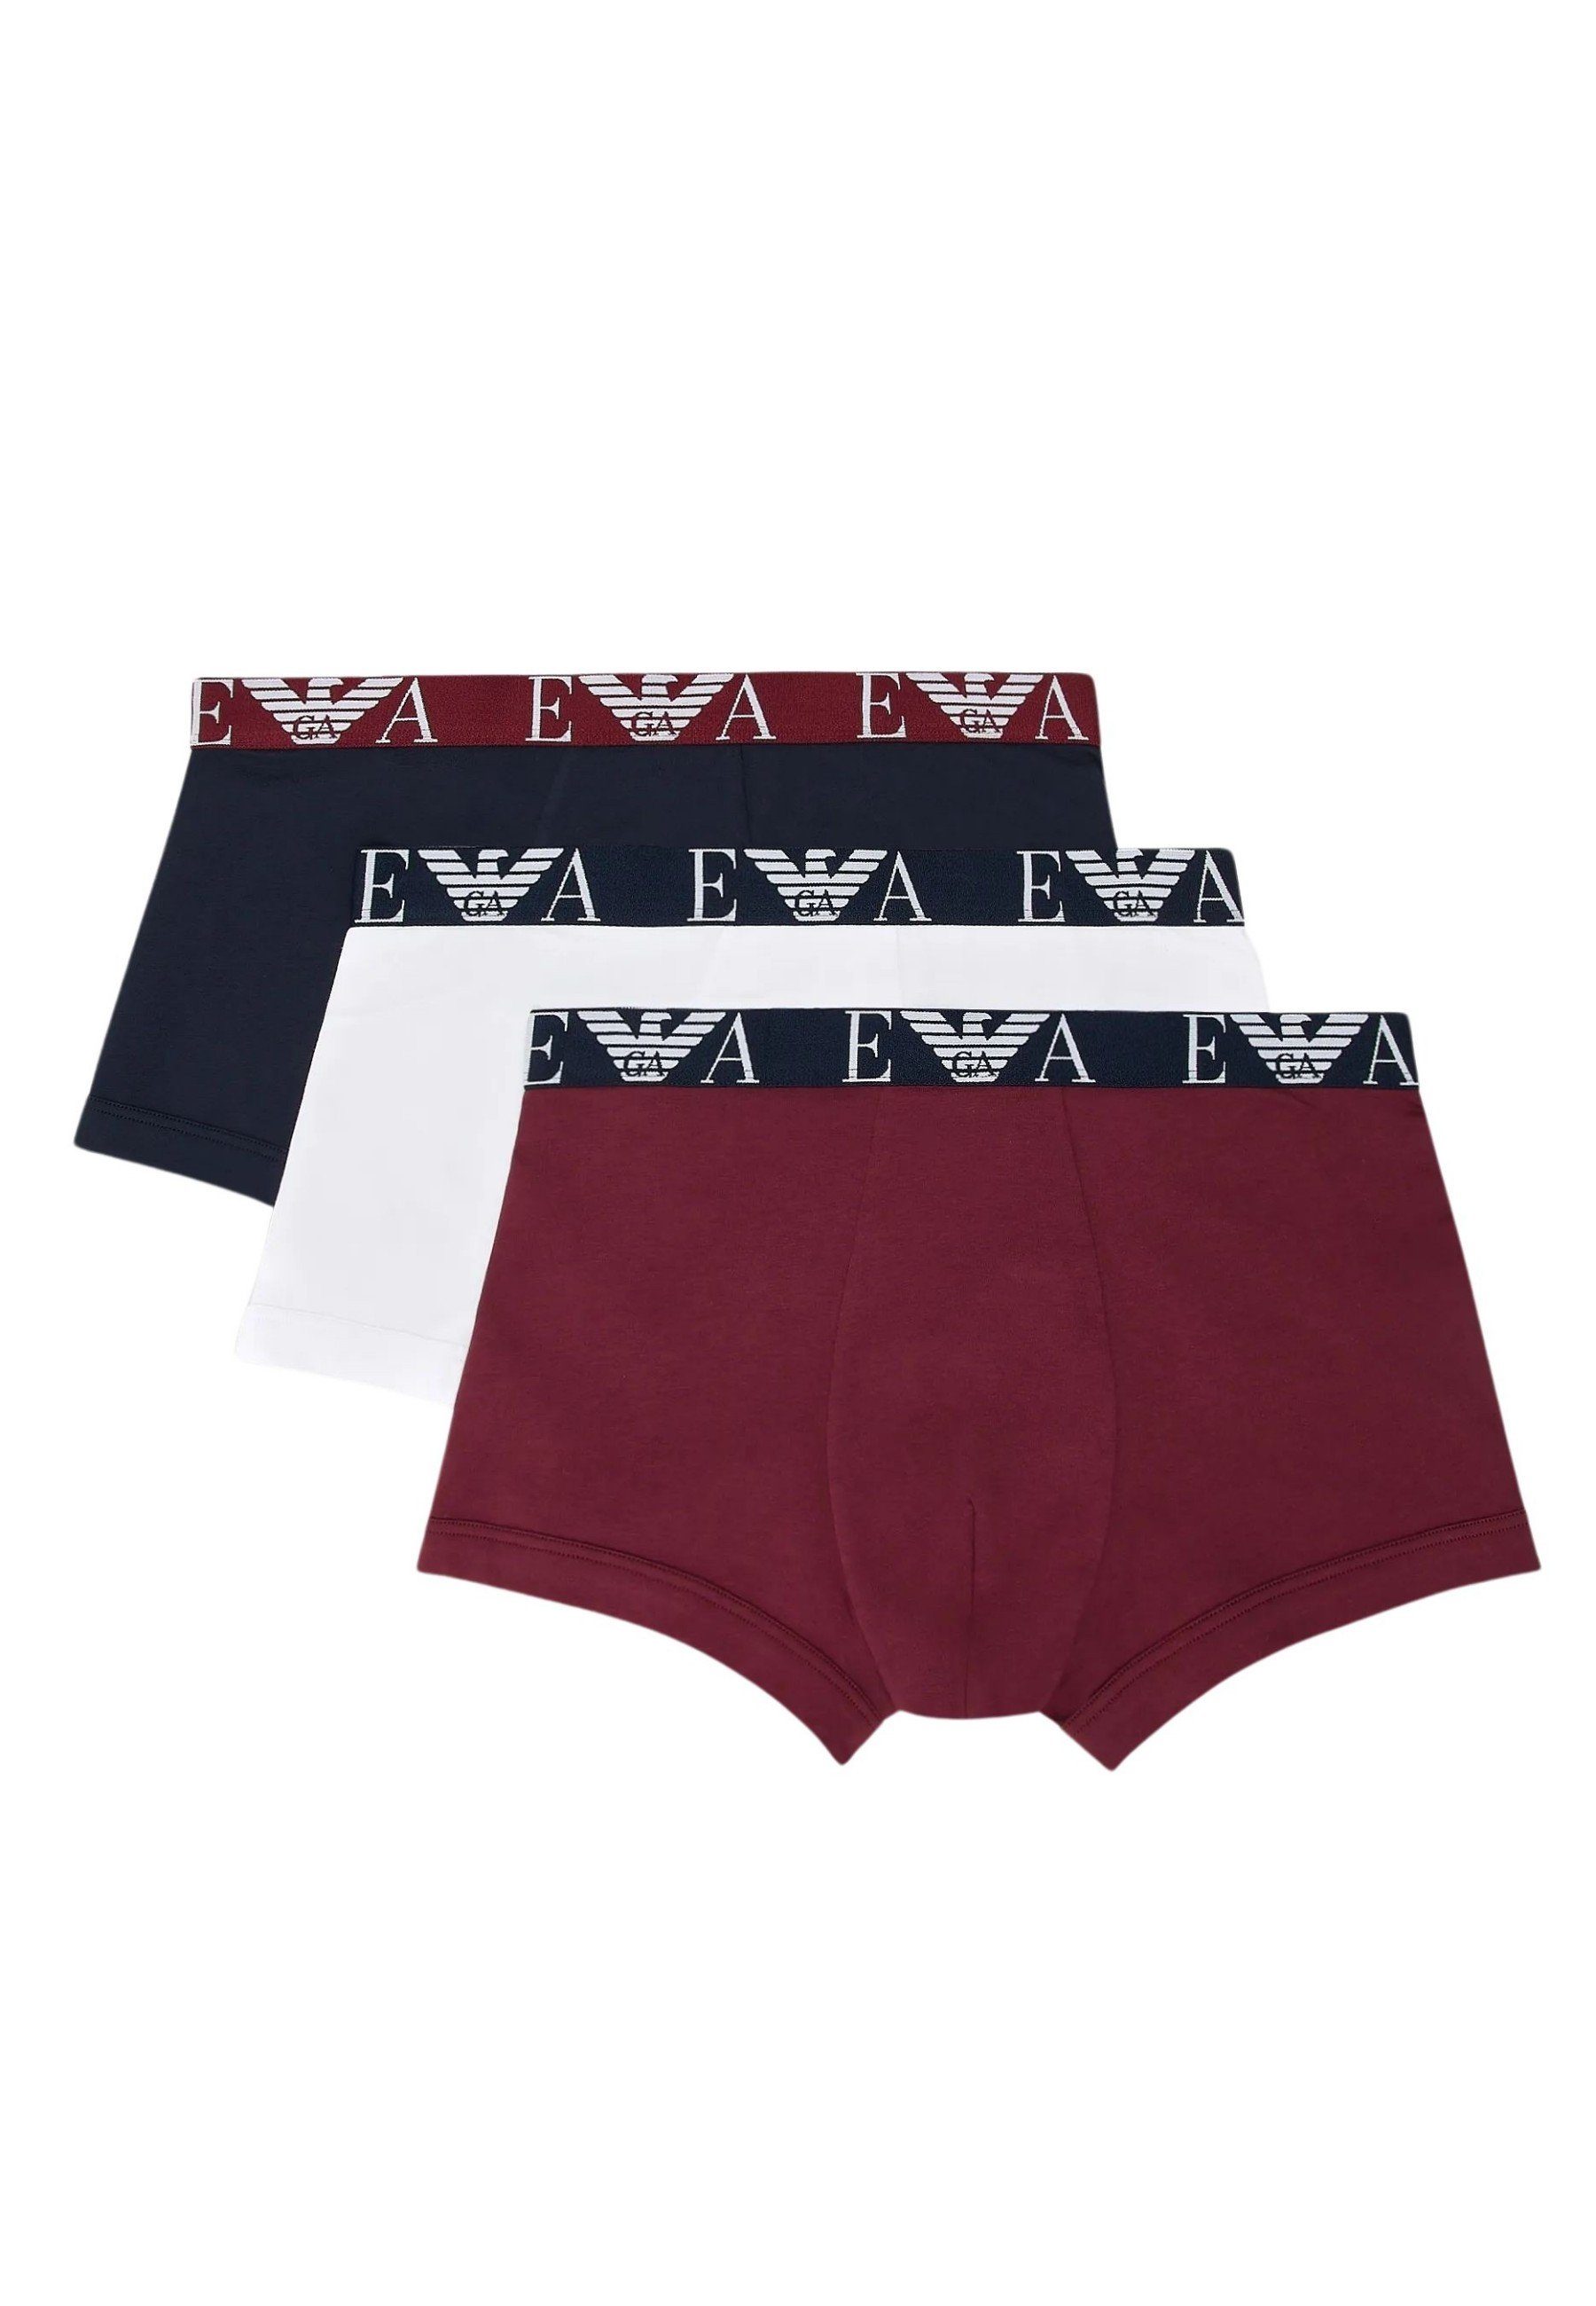 Boxershorts Pack Armani WHITE/MARIN/BURGUNDY Shorts 3 (3-St) Emporio (13911) Knit Trunks